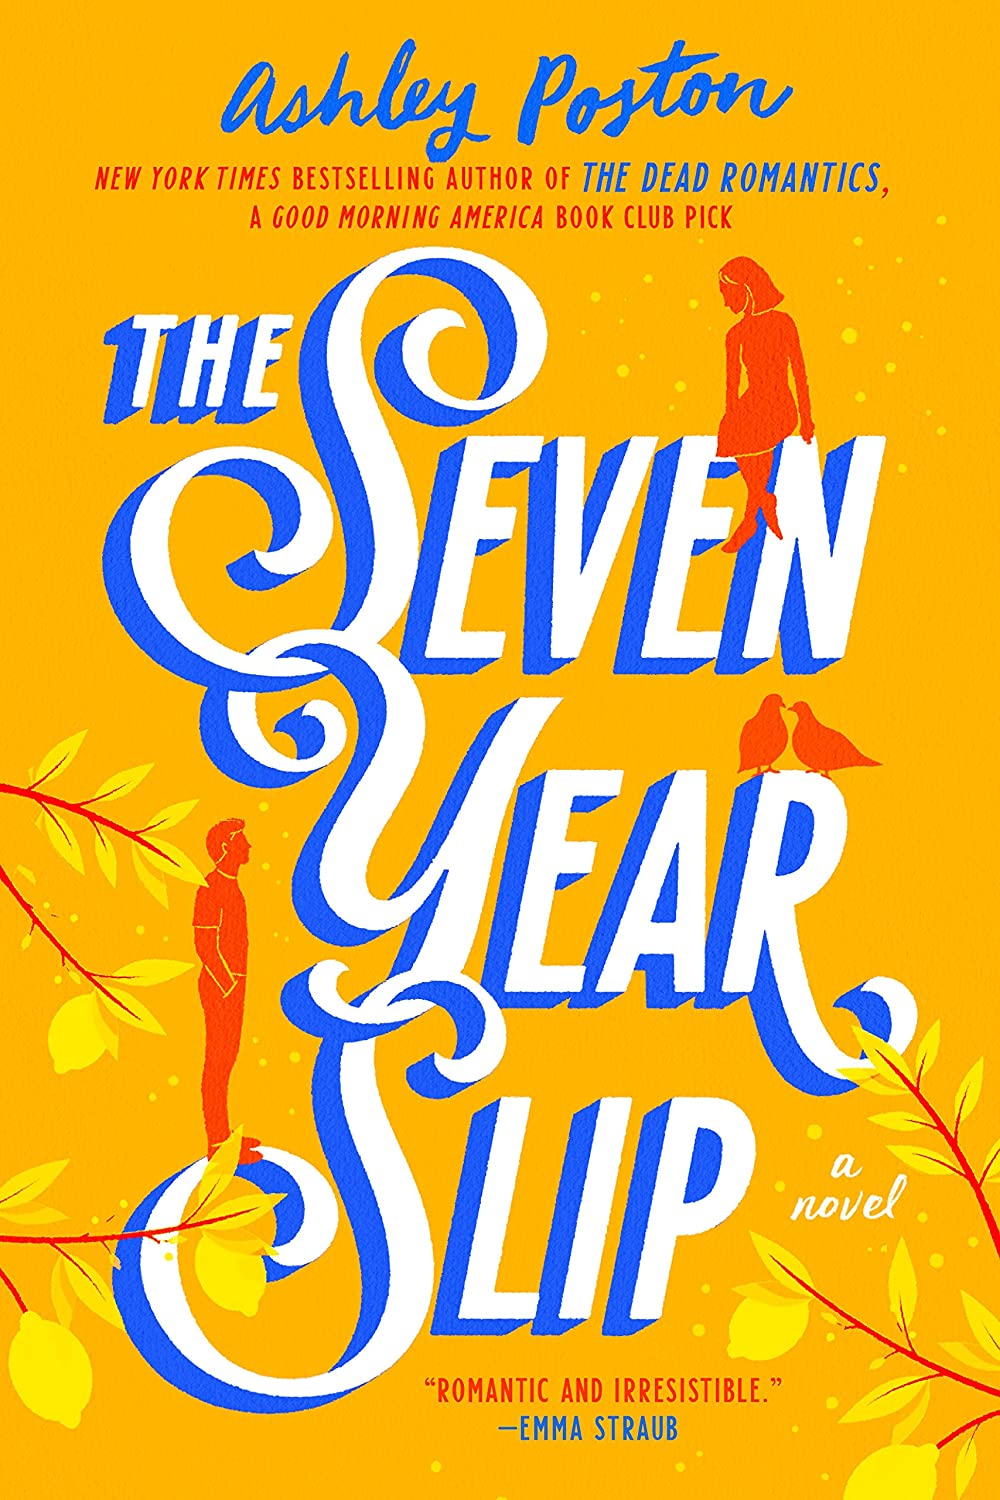 THE SEVEN YEAR SLIP by Ashley Poston